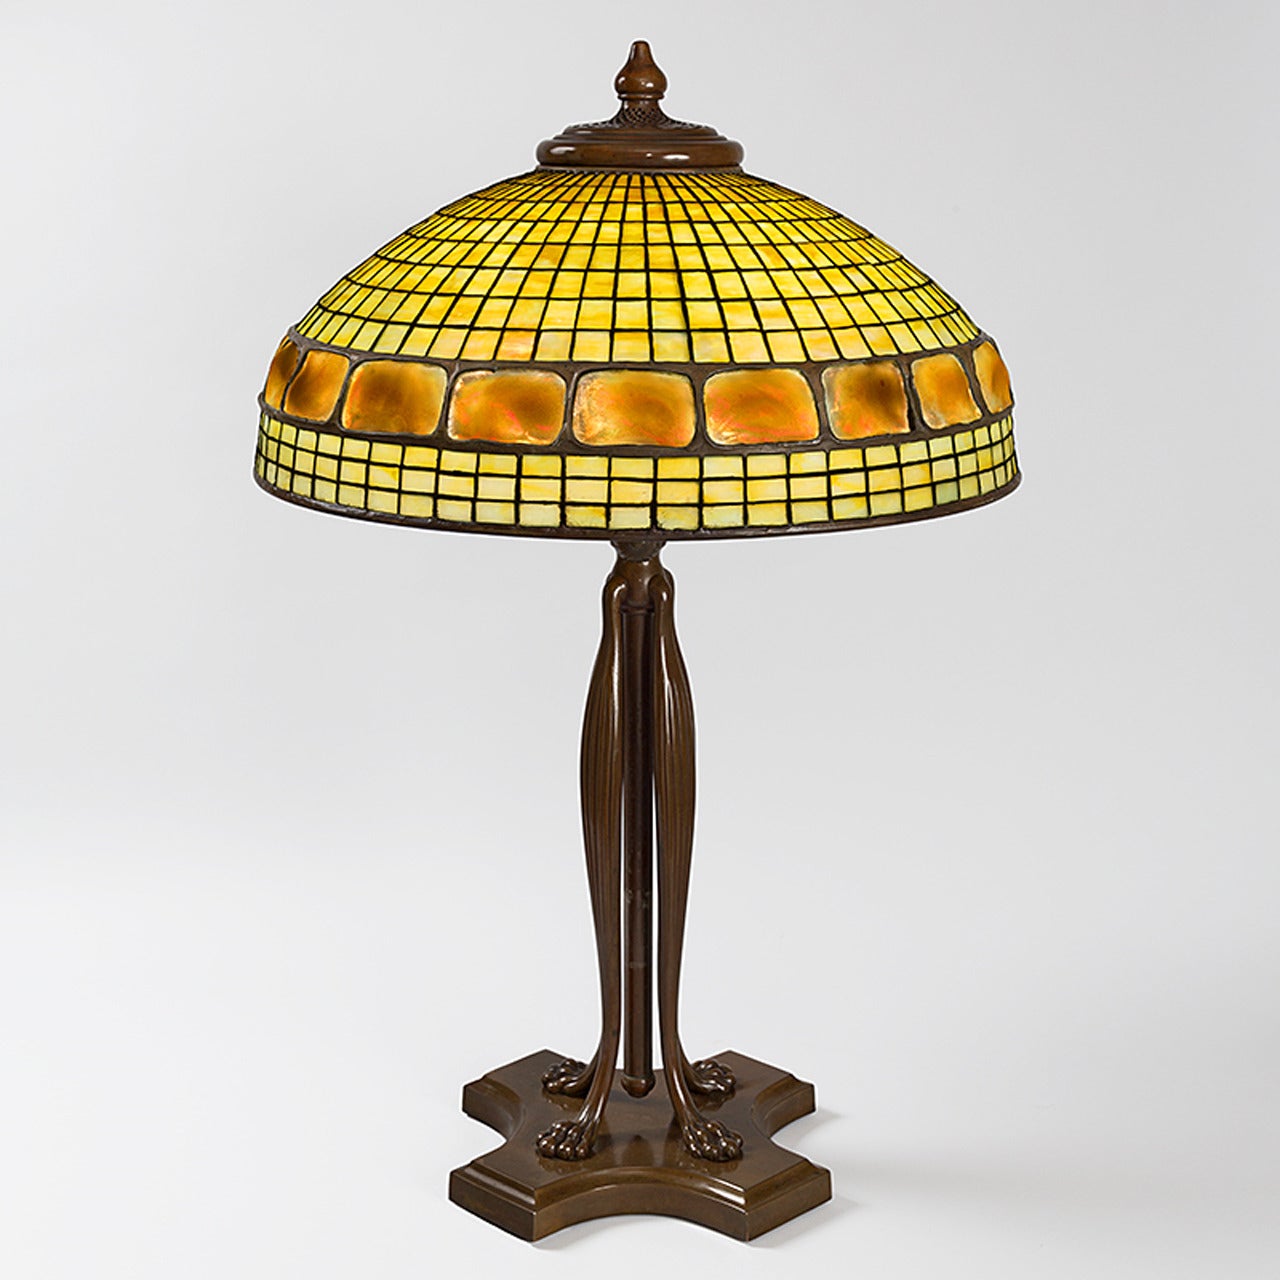 Tiffany Studios “Turtleback Tile” Table Lamp